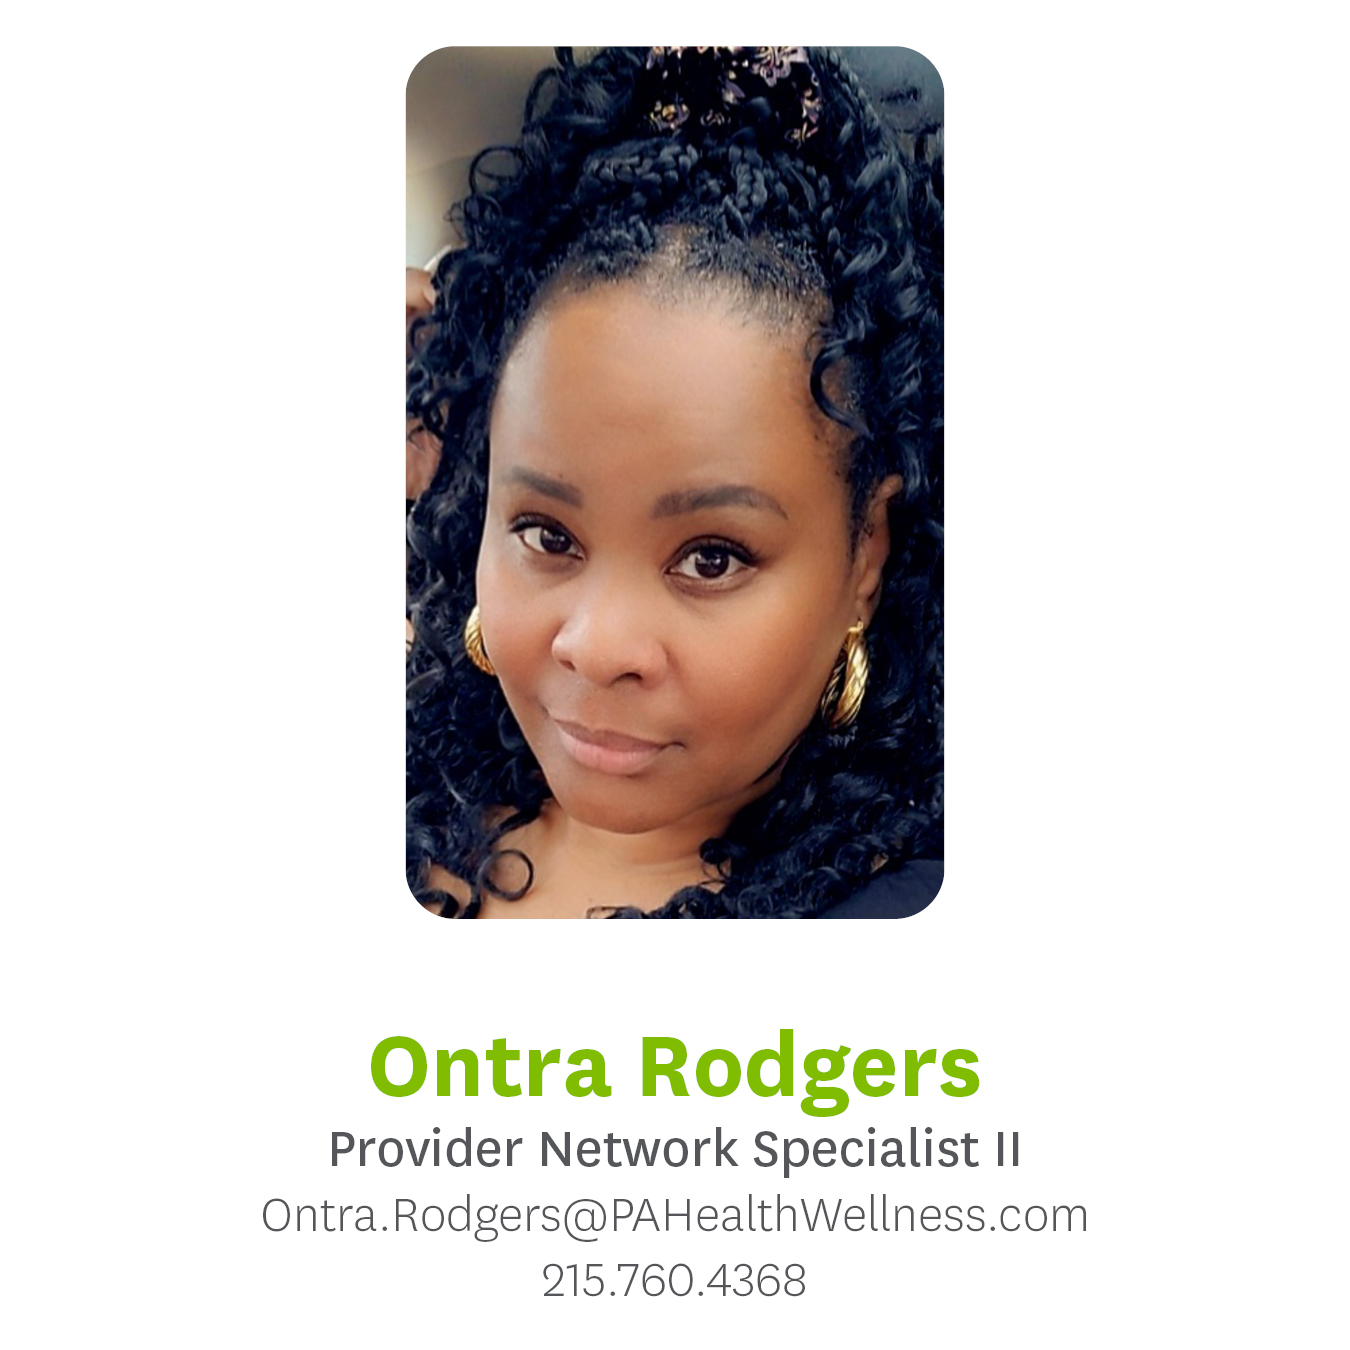 Ontra Rodgers, Provider Network Specialist 2, Ontra.Rodgers@pahealthwellness.com, 215.760.4368